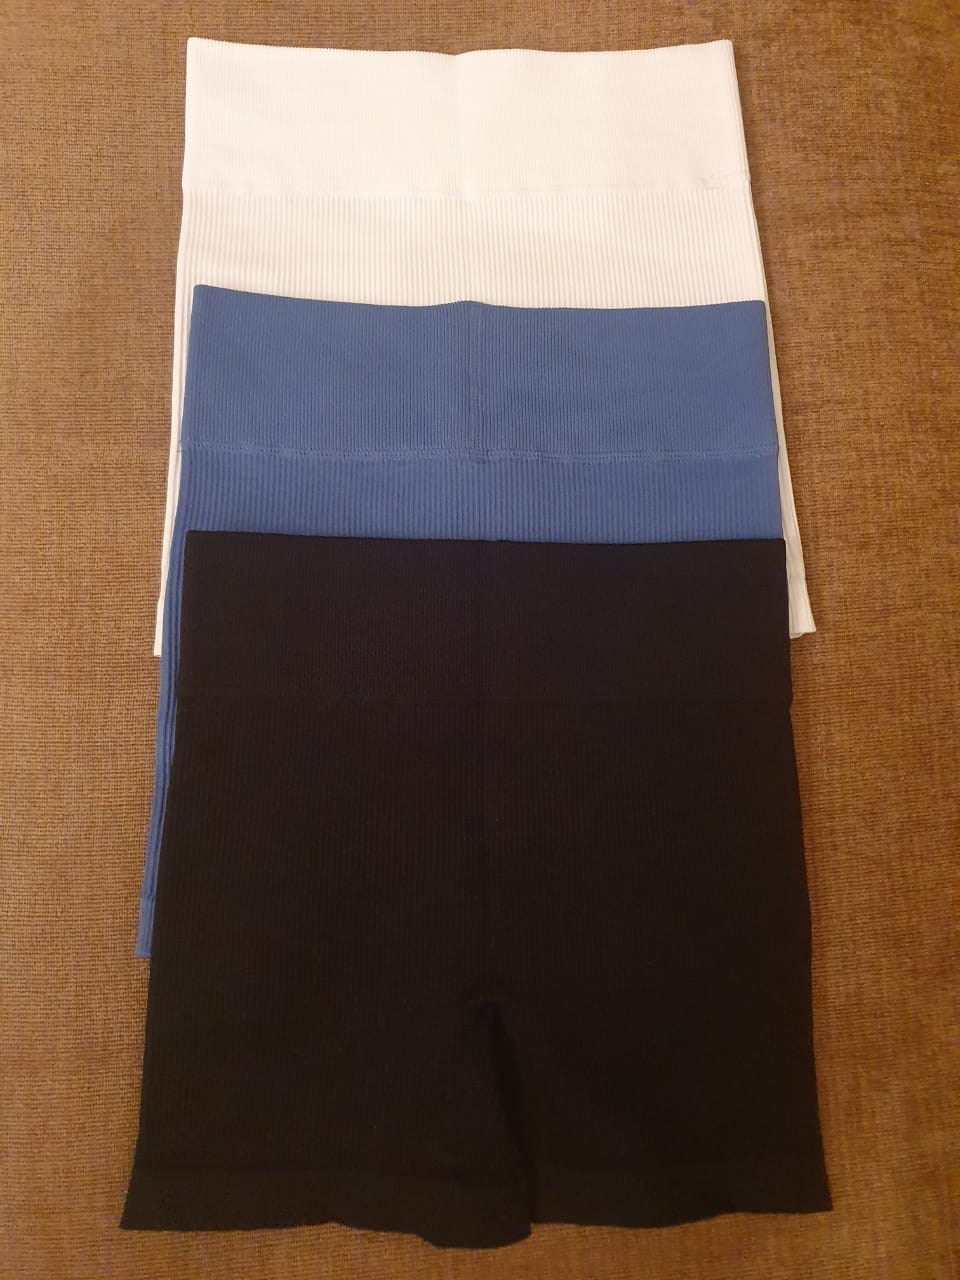 Luxu Mini Shorts in Light Blue